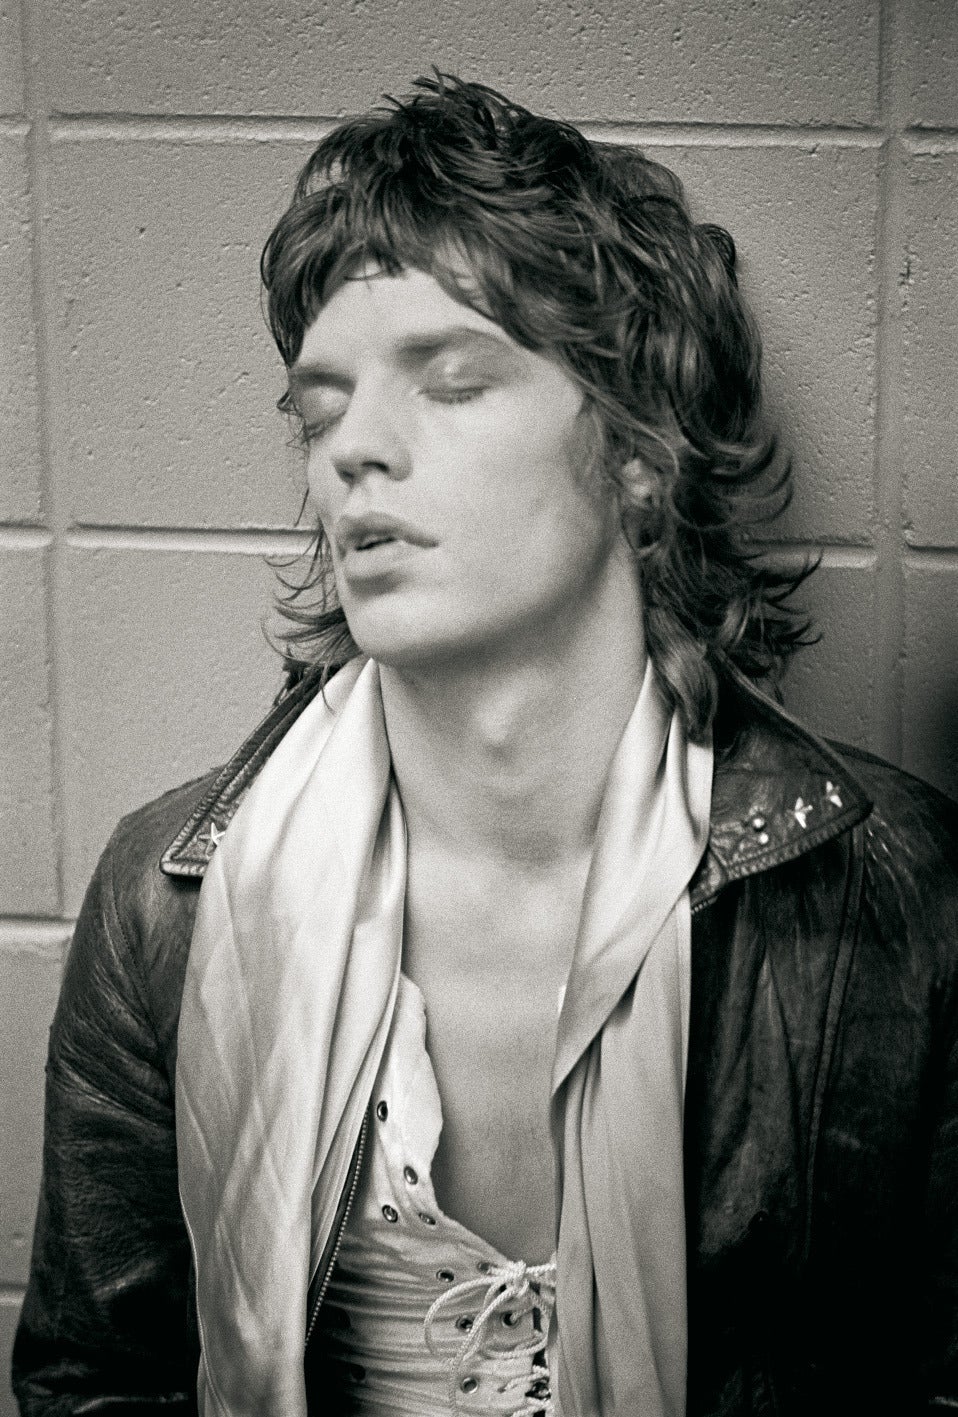 Ethan Russell Portrait Photograph - Mick Jagger "Lips"